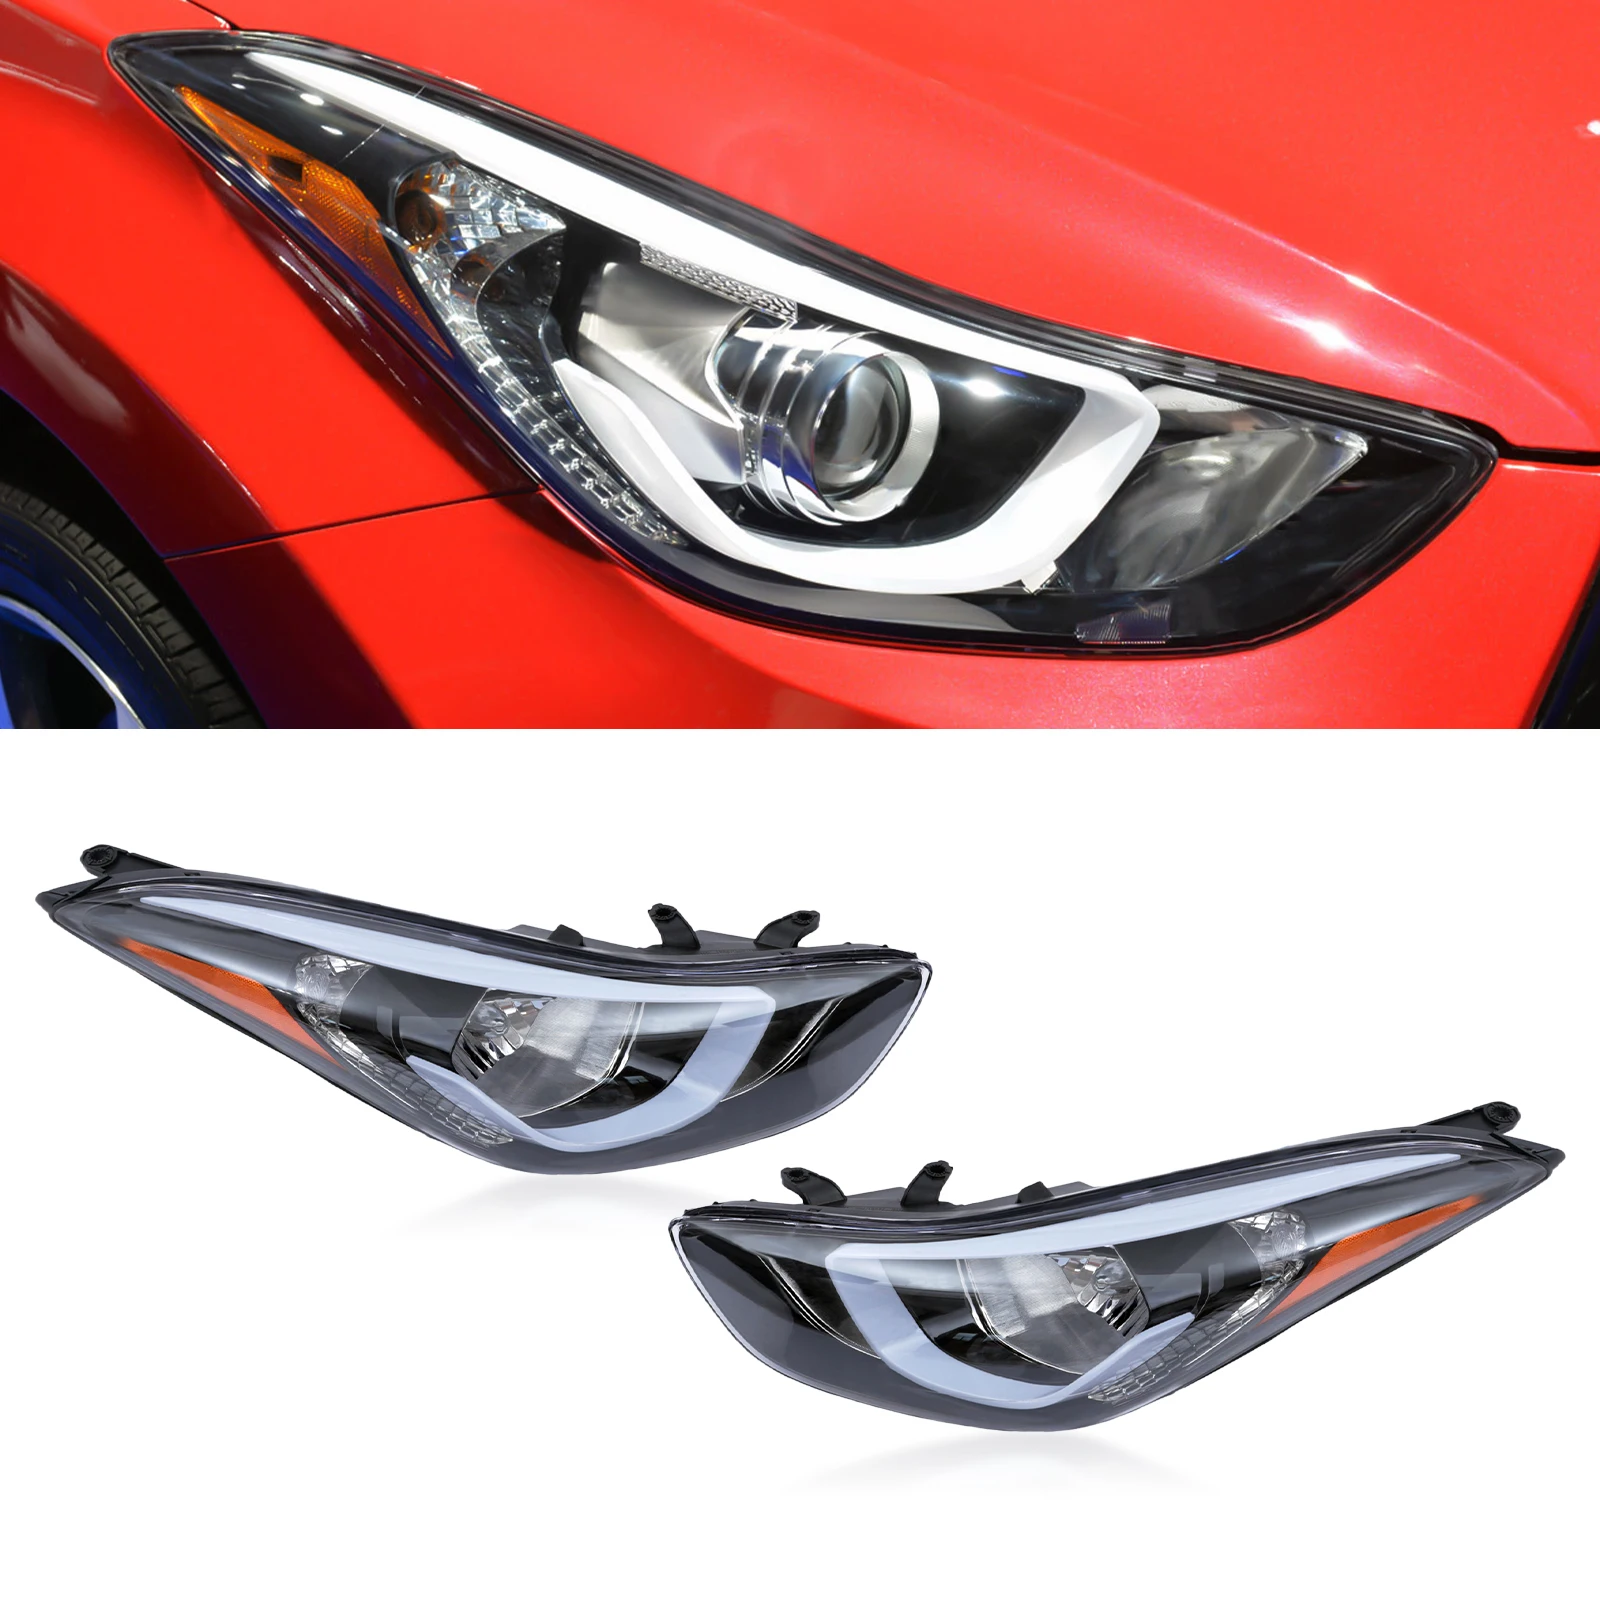 

Car Light Halogen Headlight LH/RH Headlamp Fit for Hyundai Elantra 2014-2016 Left/Right Side Headlight Assembly Car Accessories